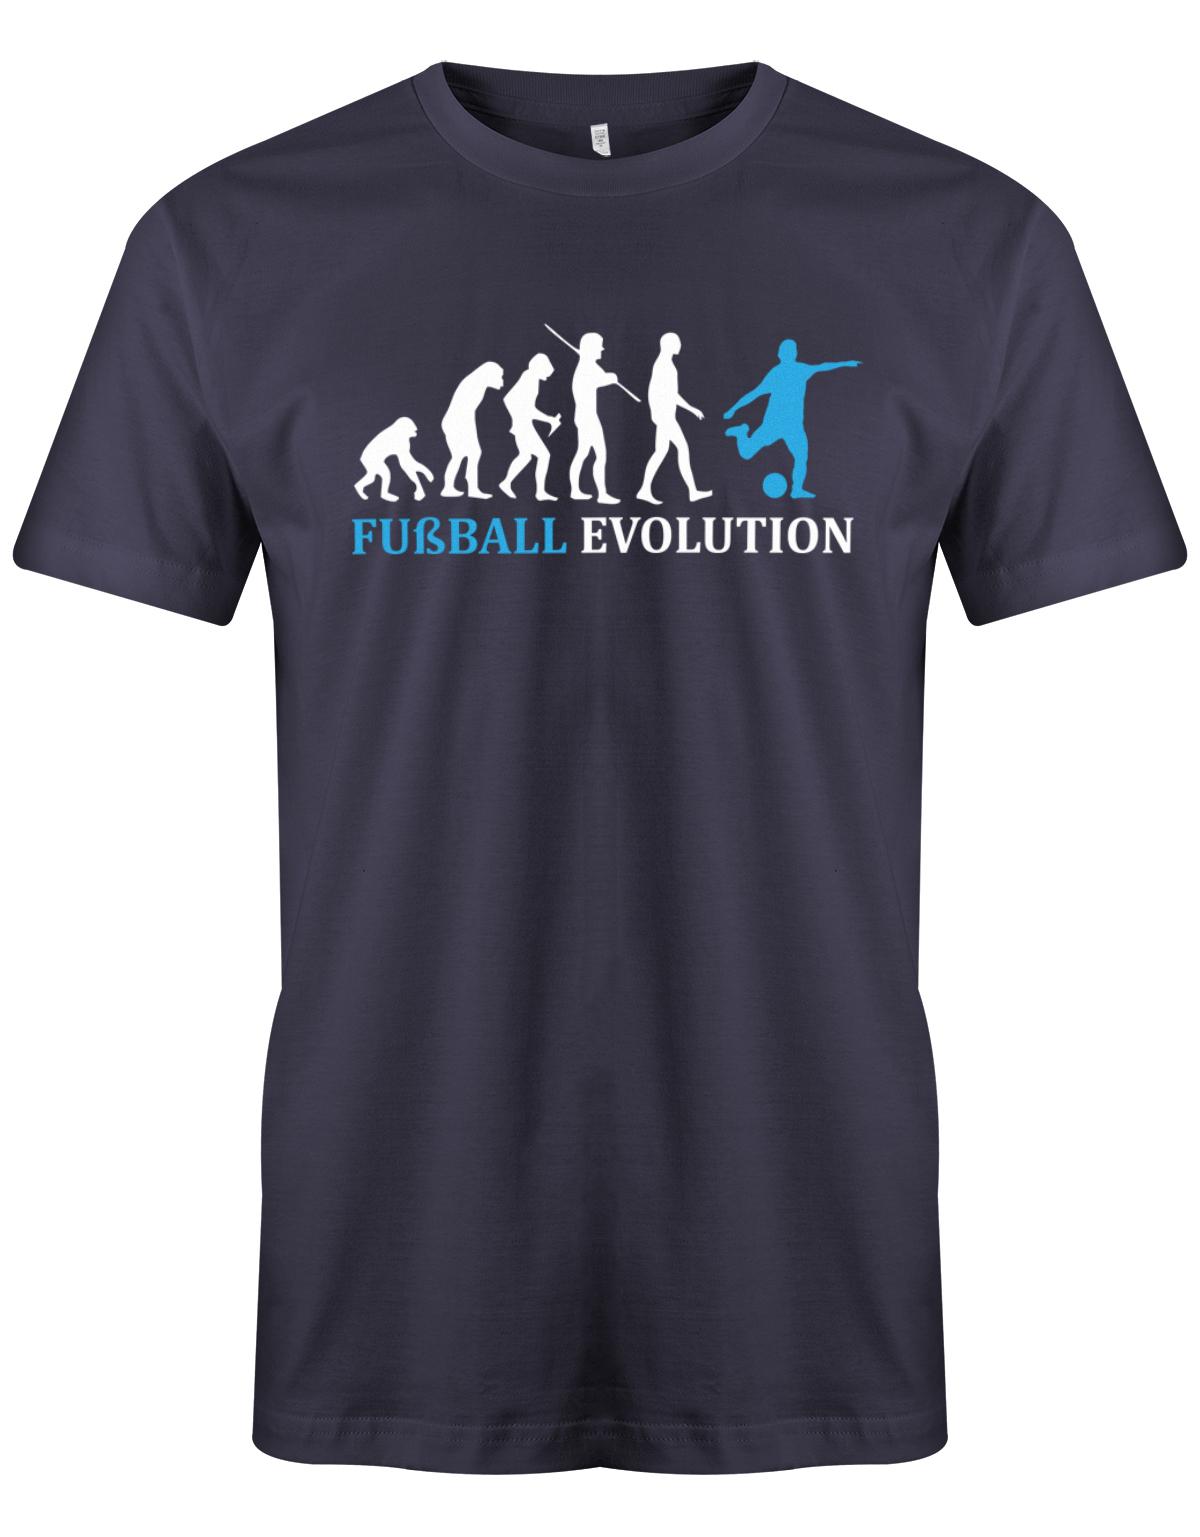 Fussball-Evolution-Herren-Shirt-Navy-Hellblau